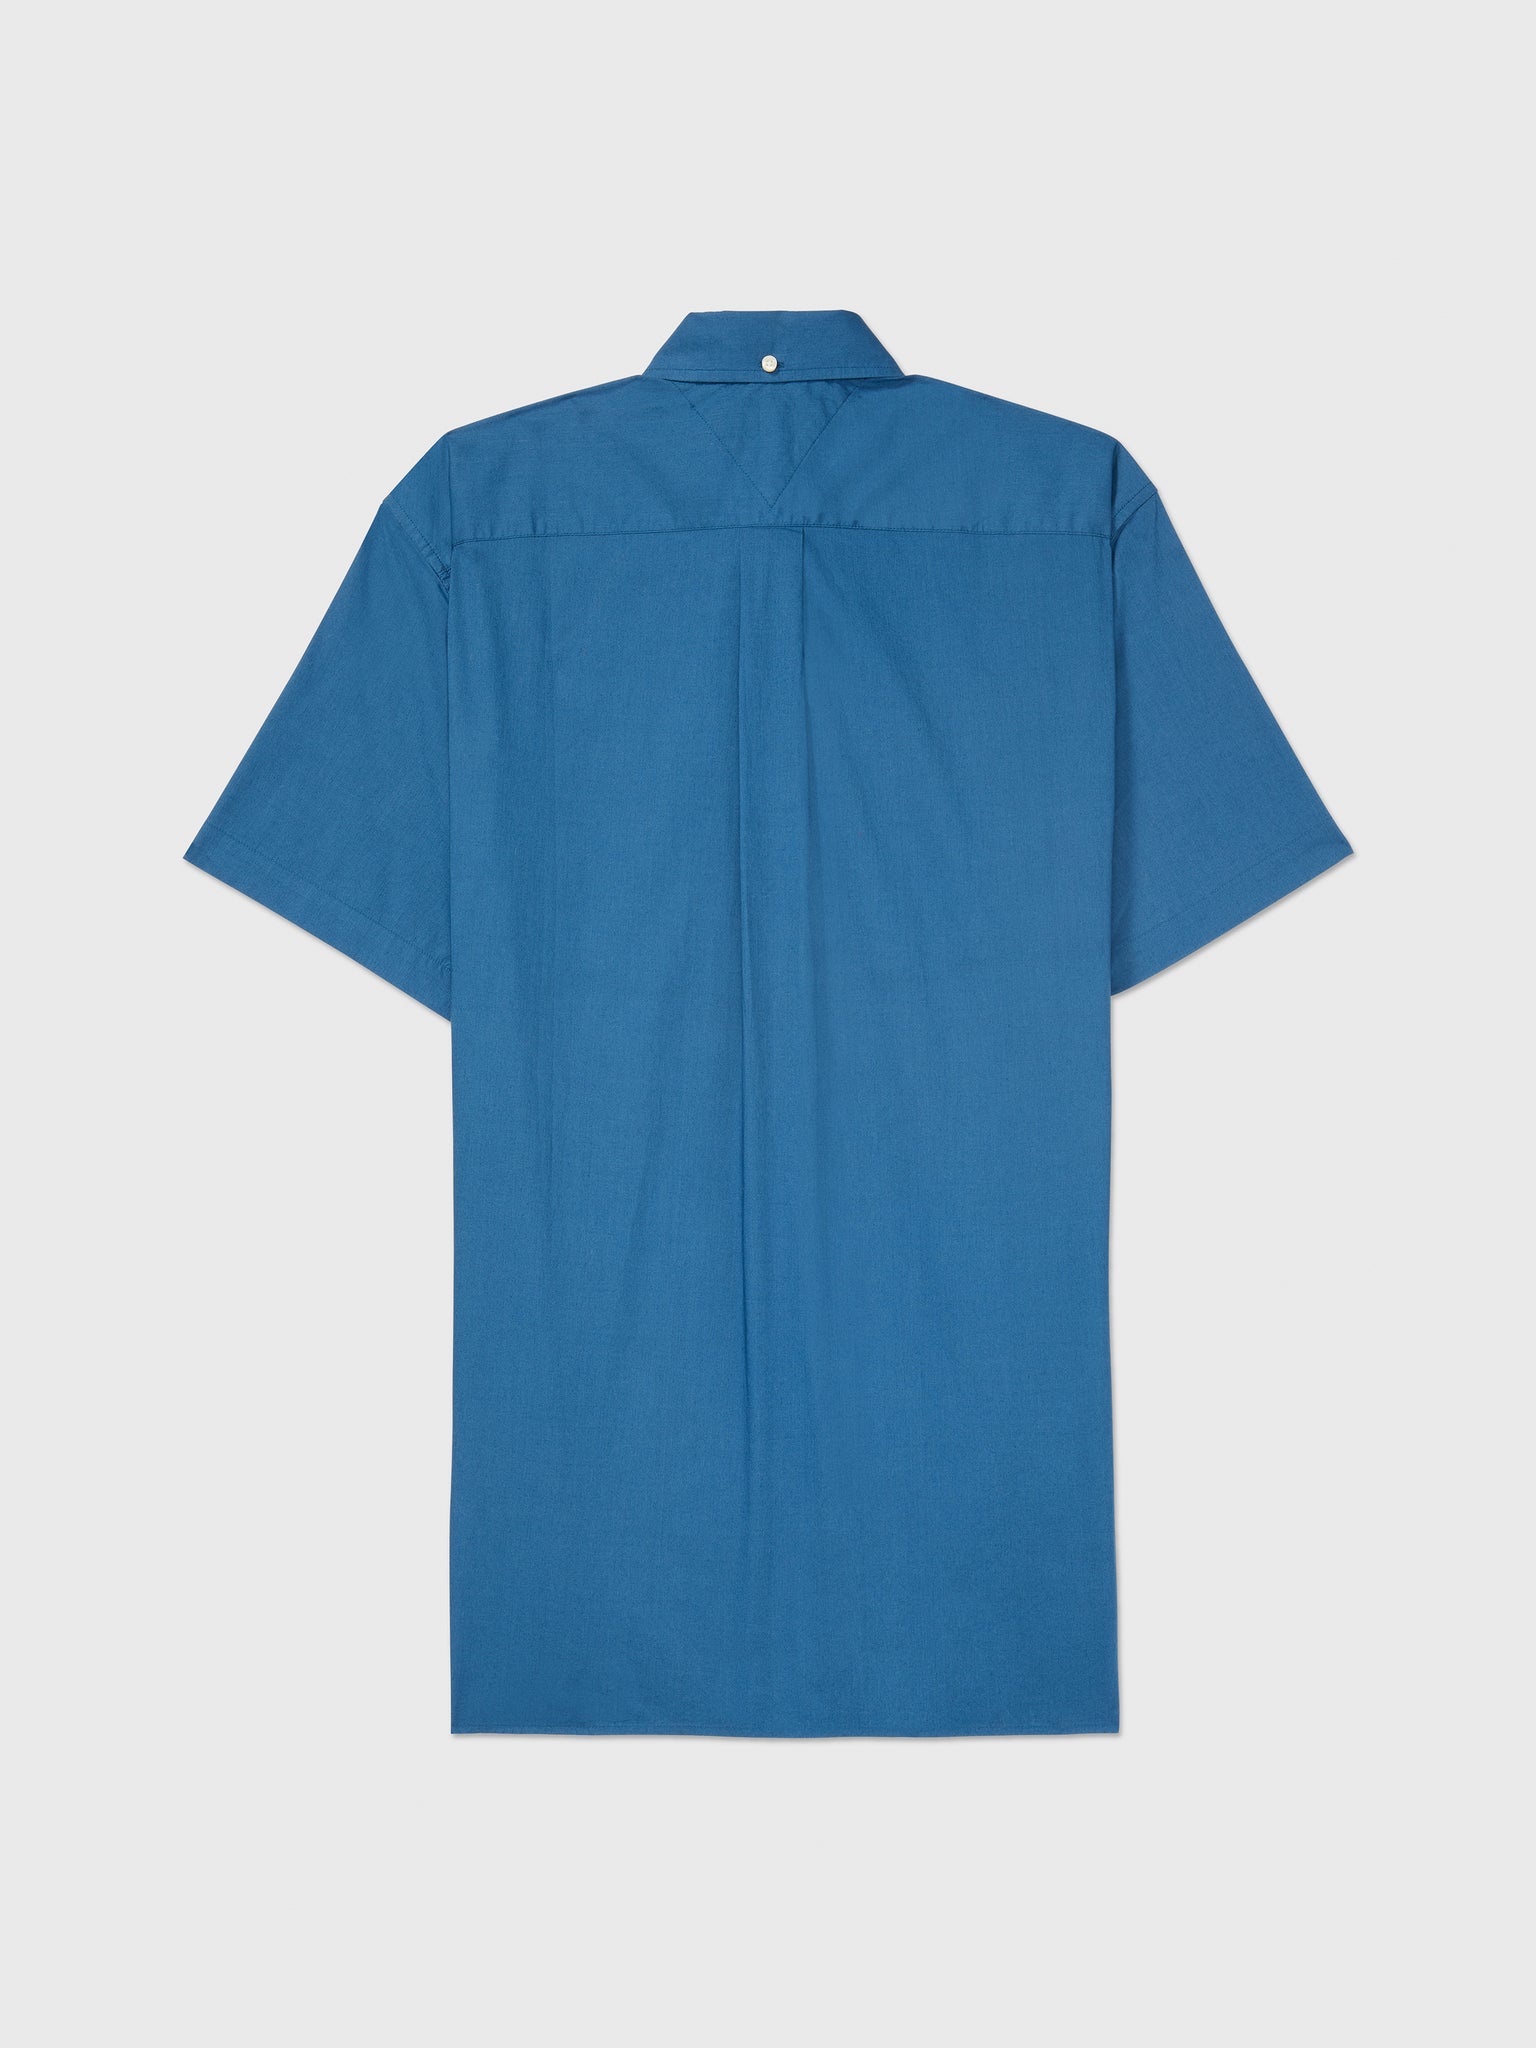 Short Sleeve Maxwell Shirt (Mens) - Alfalfa Blue